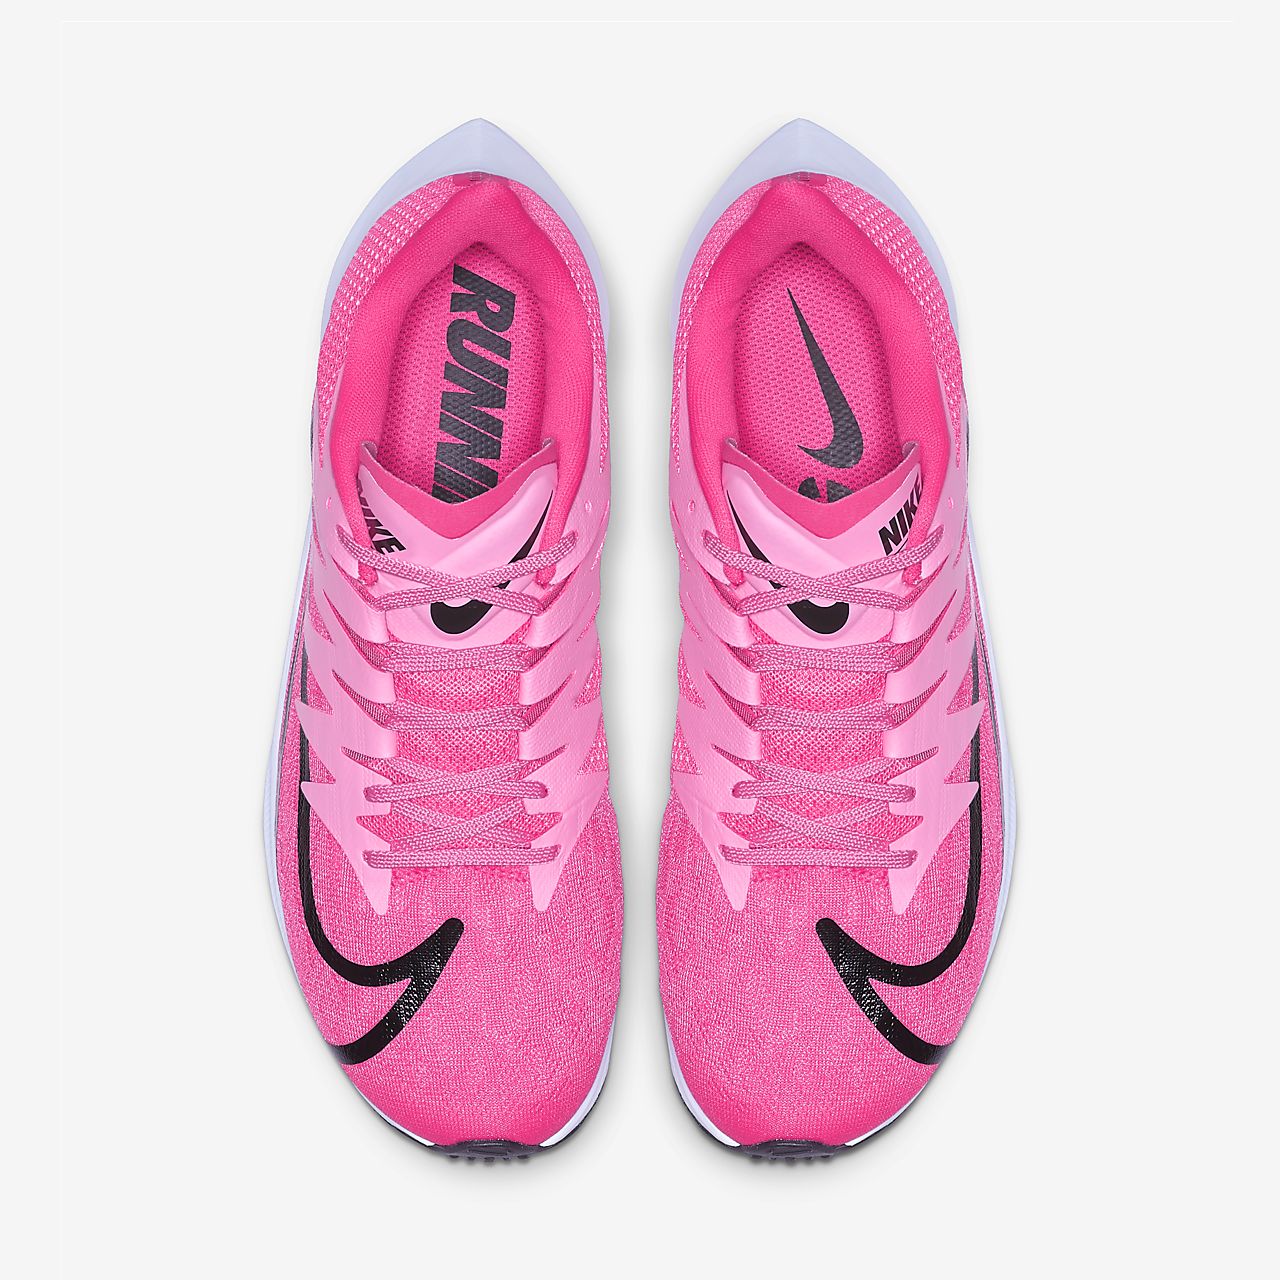 Nike Zoom Rival Fly - Løbesko - Pink/Blå/Sort | DK-12414